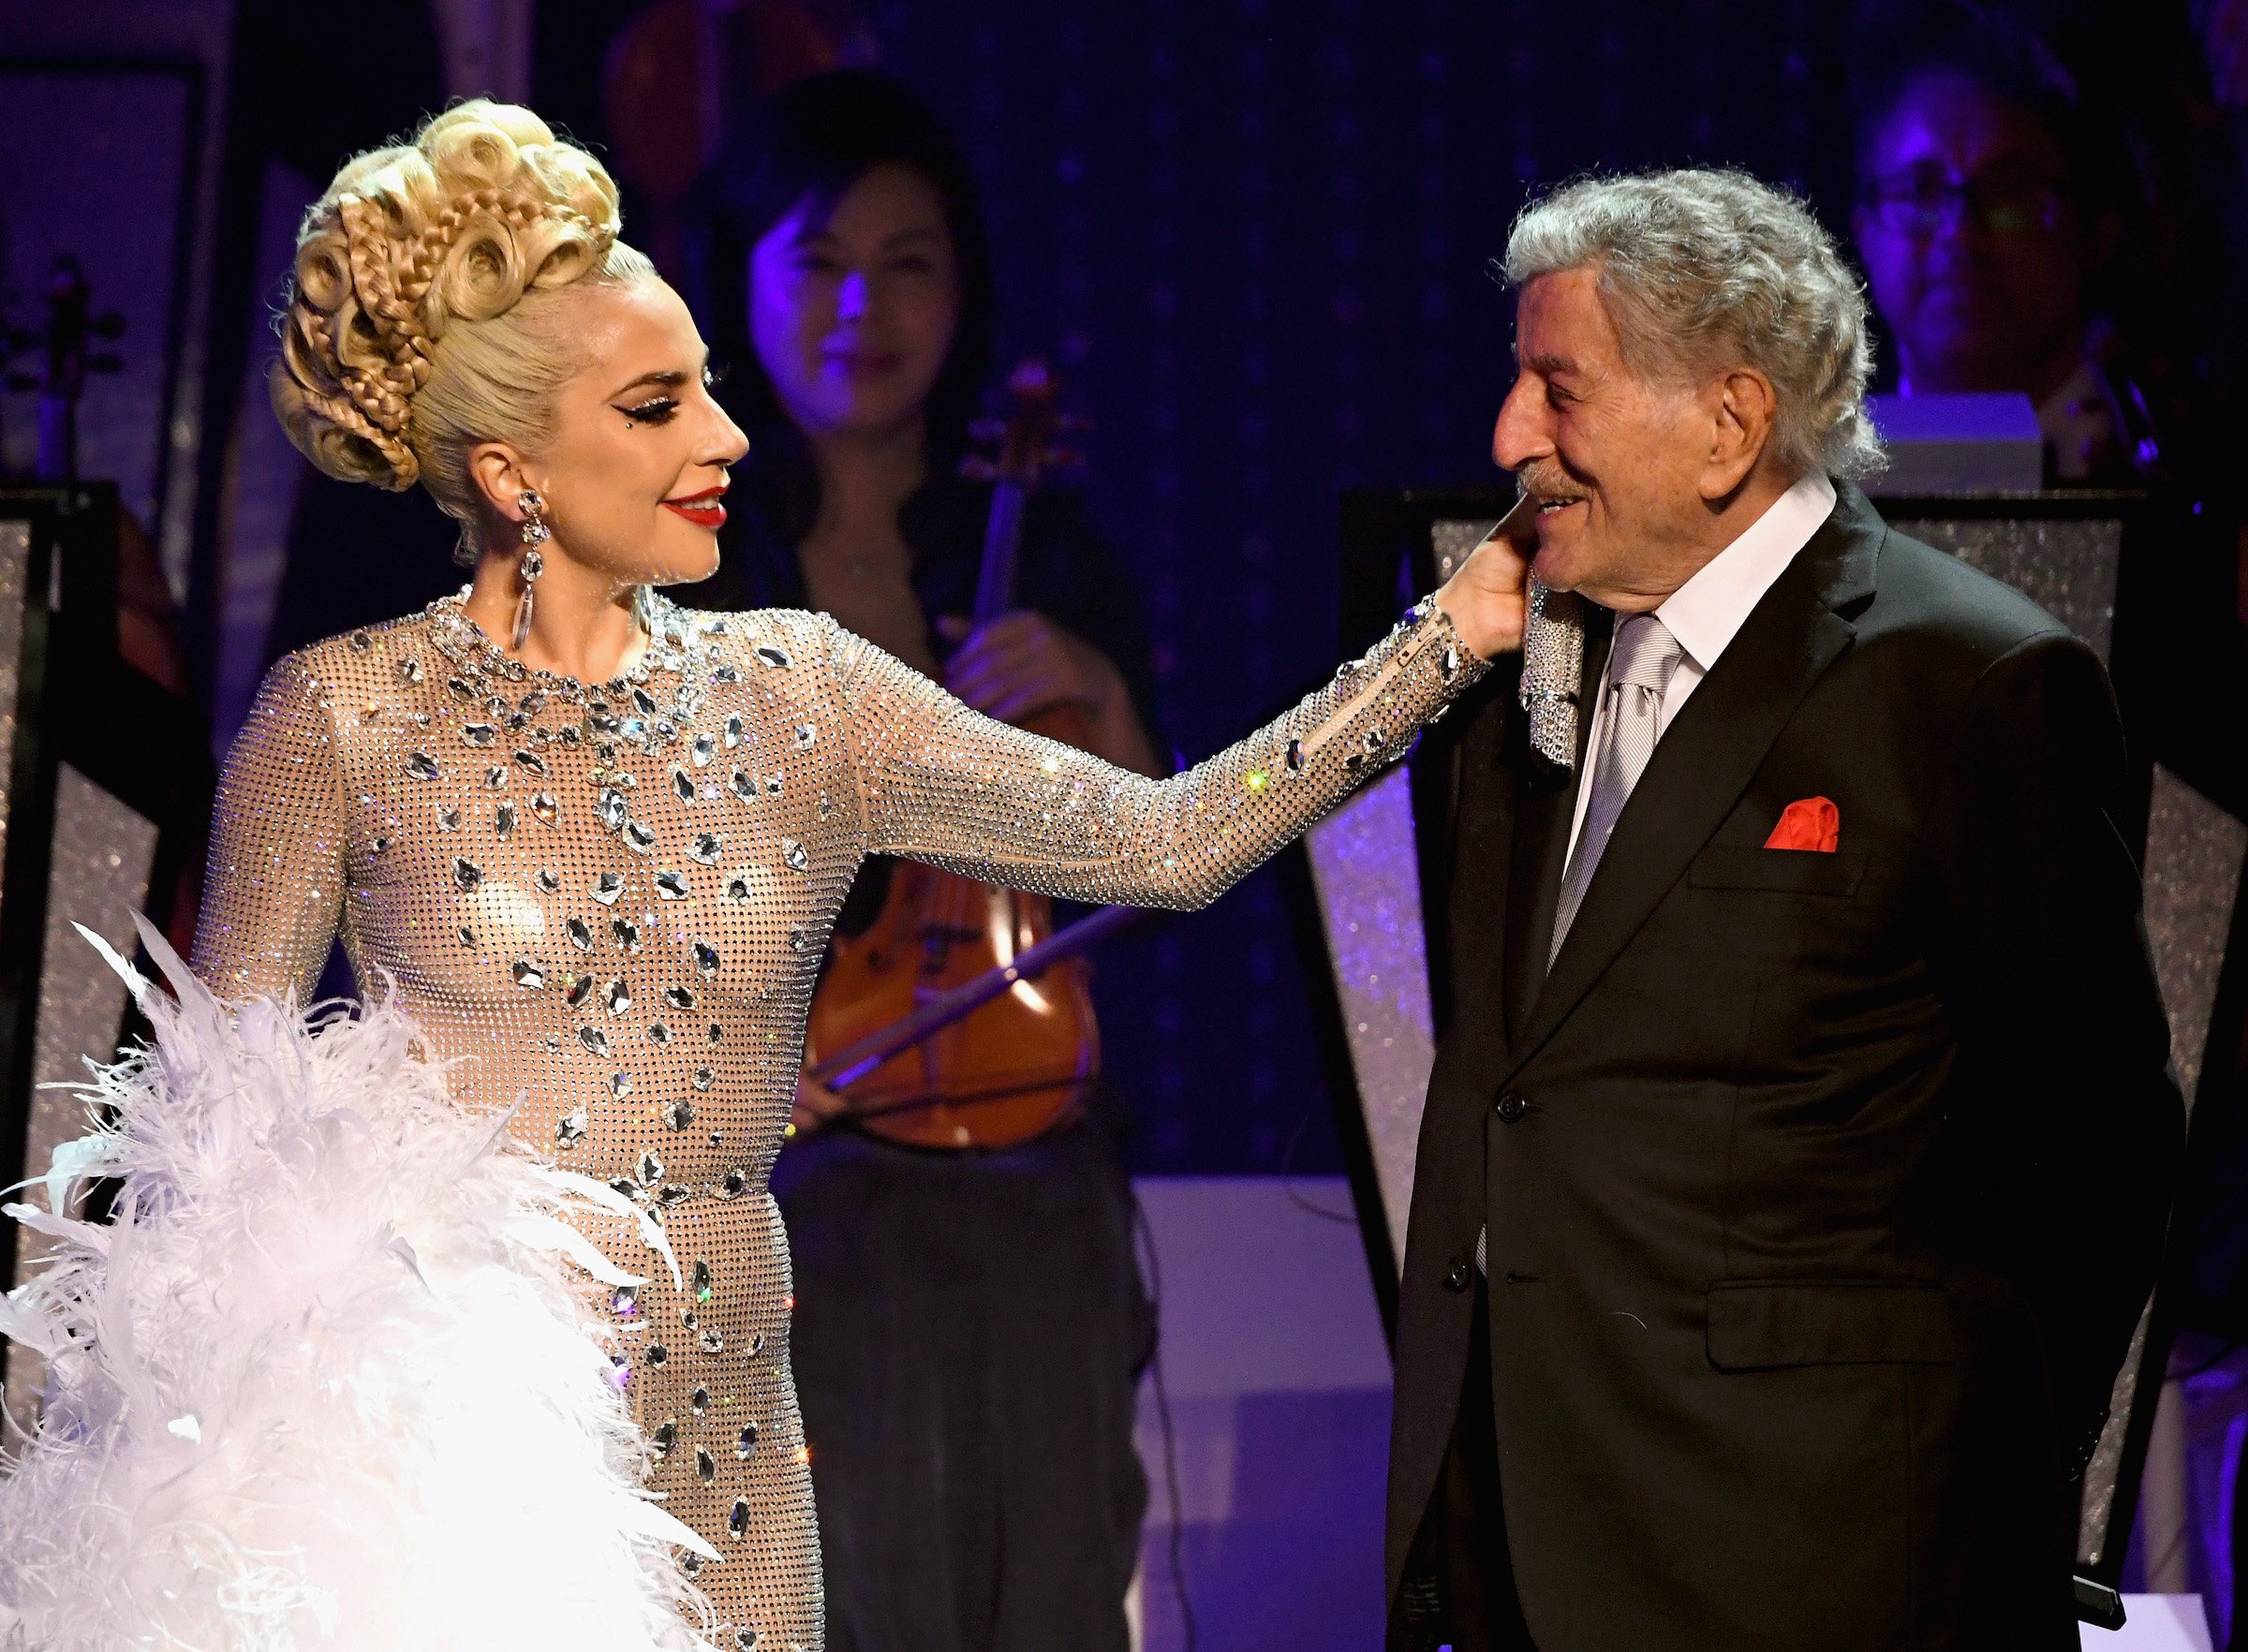 Lady Gaga touching Tony Bennett on stage